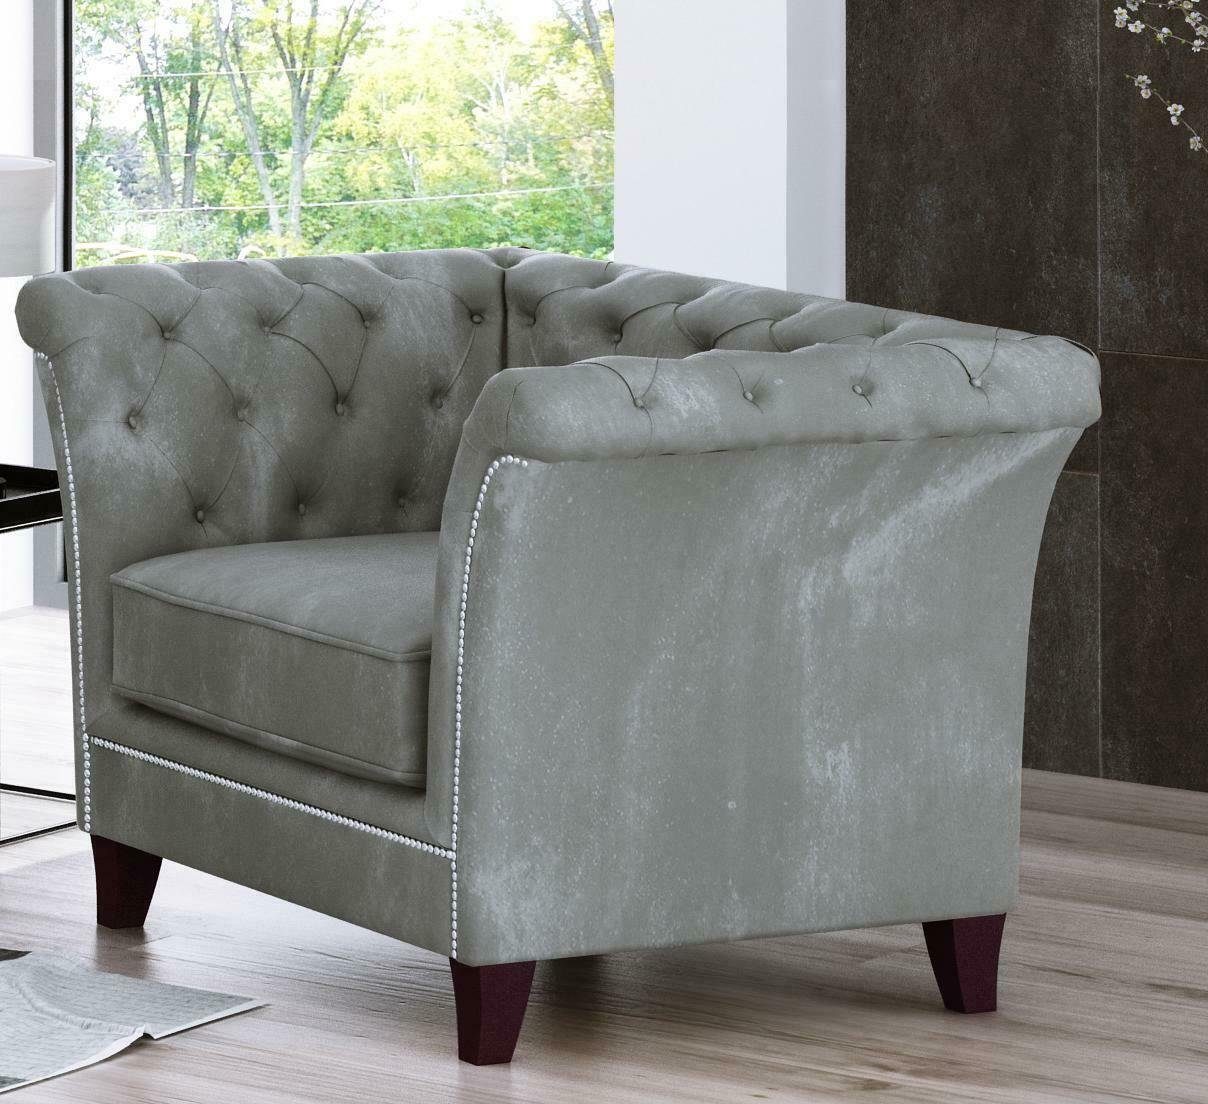 JVmoebel Sessel, Chesterfield Sessel Couch Polster 1 Sitzer Samt Design Couchen Sofas Textil Neu Grau